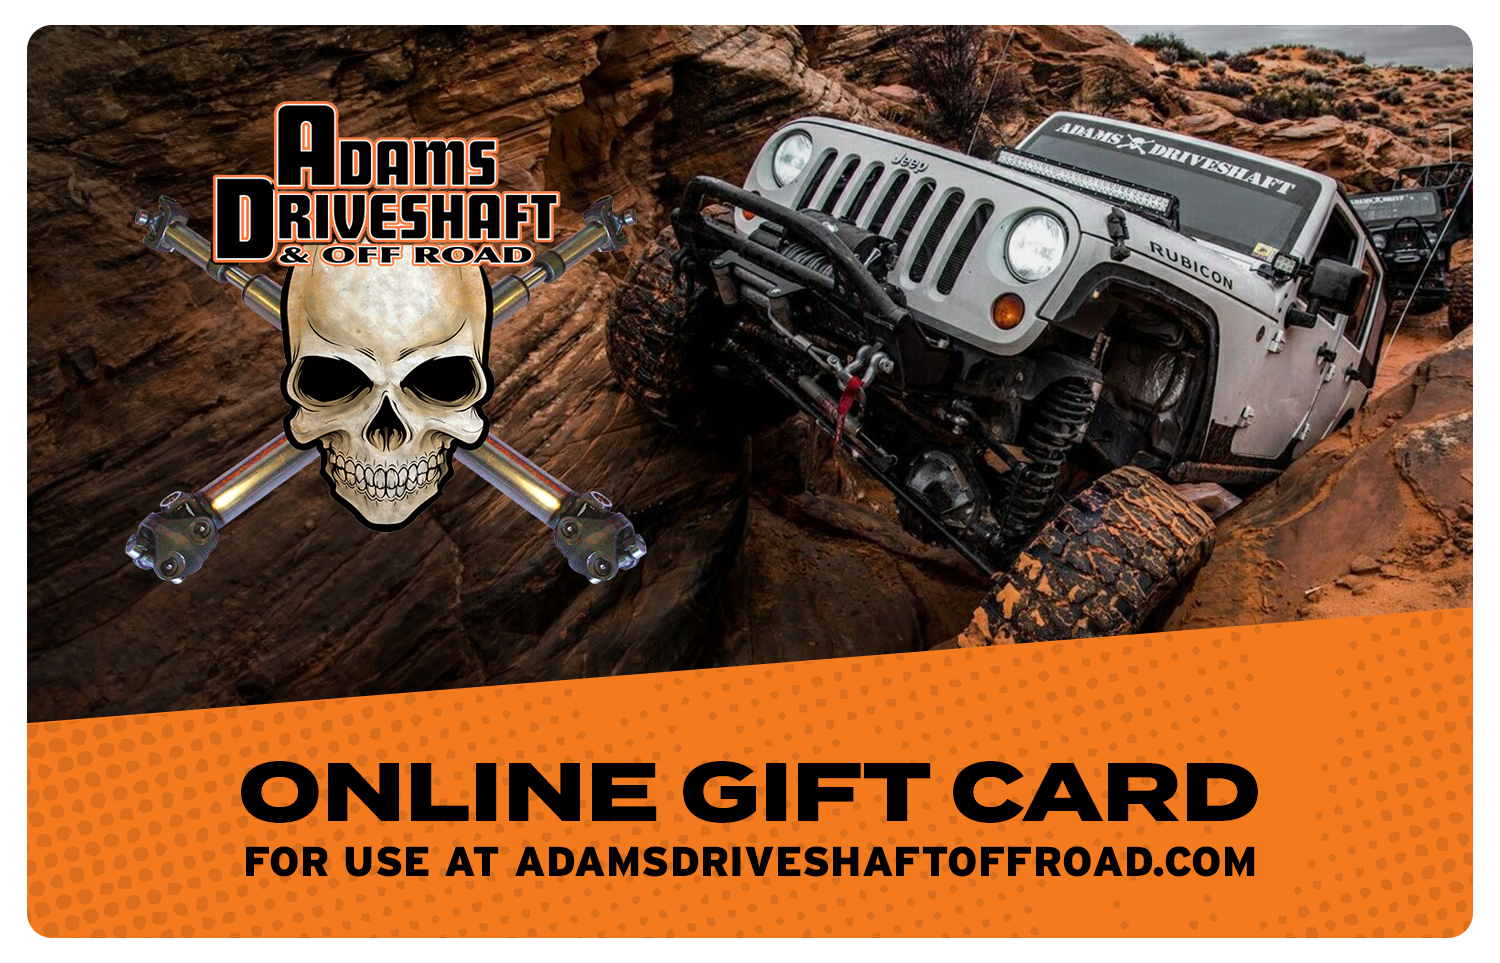 Adams Driveshaft Gift Card